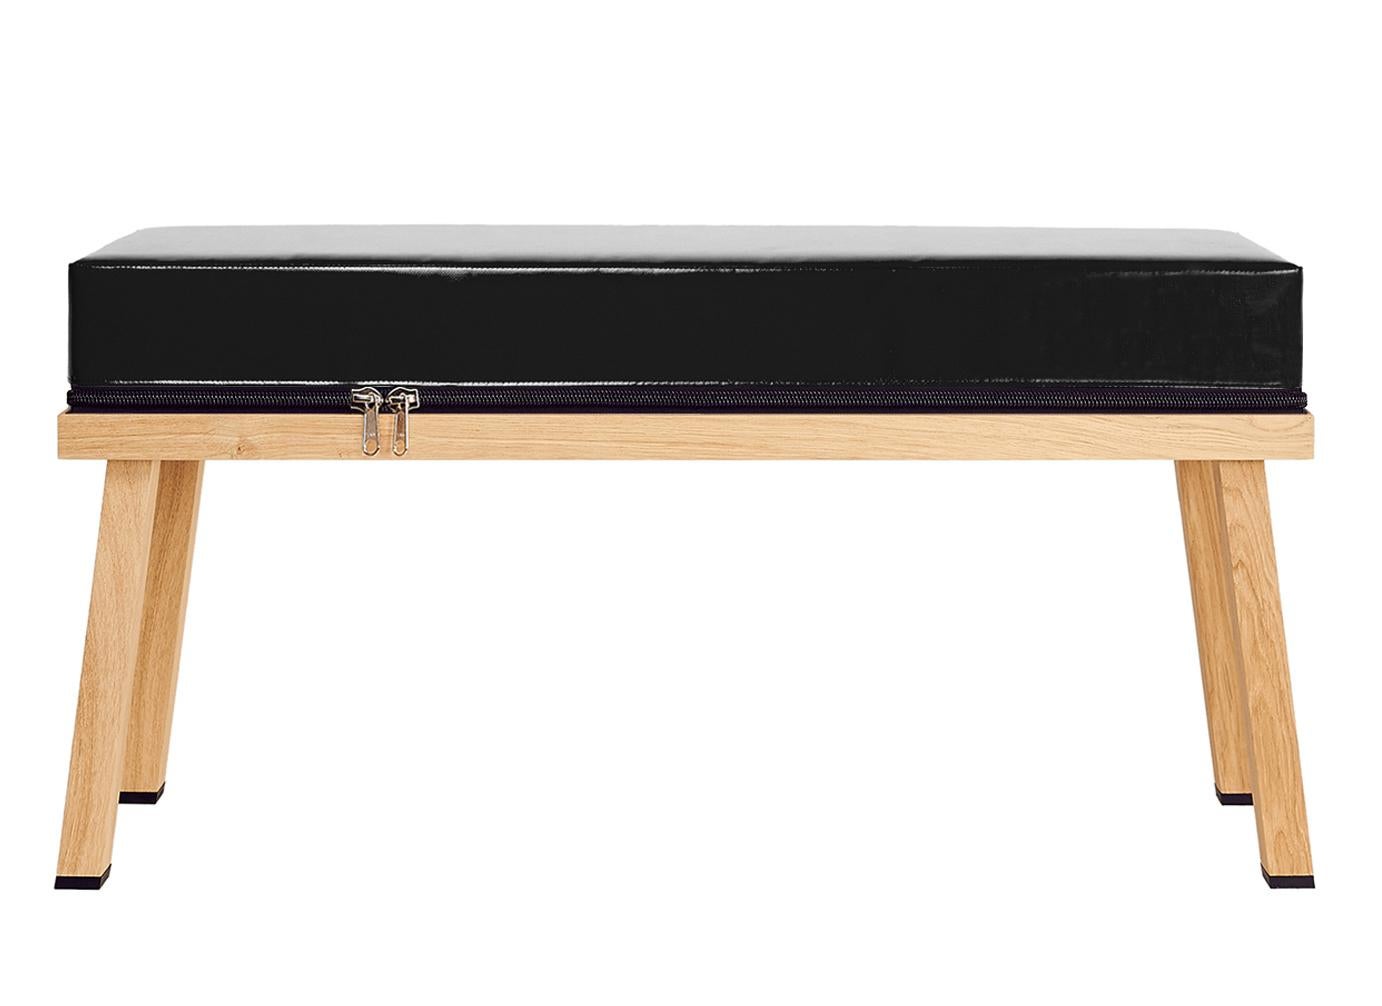 Visser and Meijwaard truecolors high bench in black PVC cloth with zipper detail

Designed by Visser en Meijwaard
Contemporary, Netherlands, 2015
PVC cloth, oakwood, rubber
Measures: H 32 in, W 33.5 in, D 12 in

Available in white, dark grey,